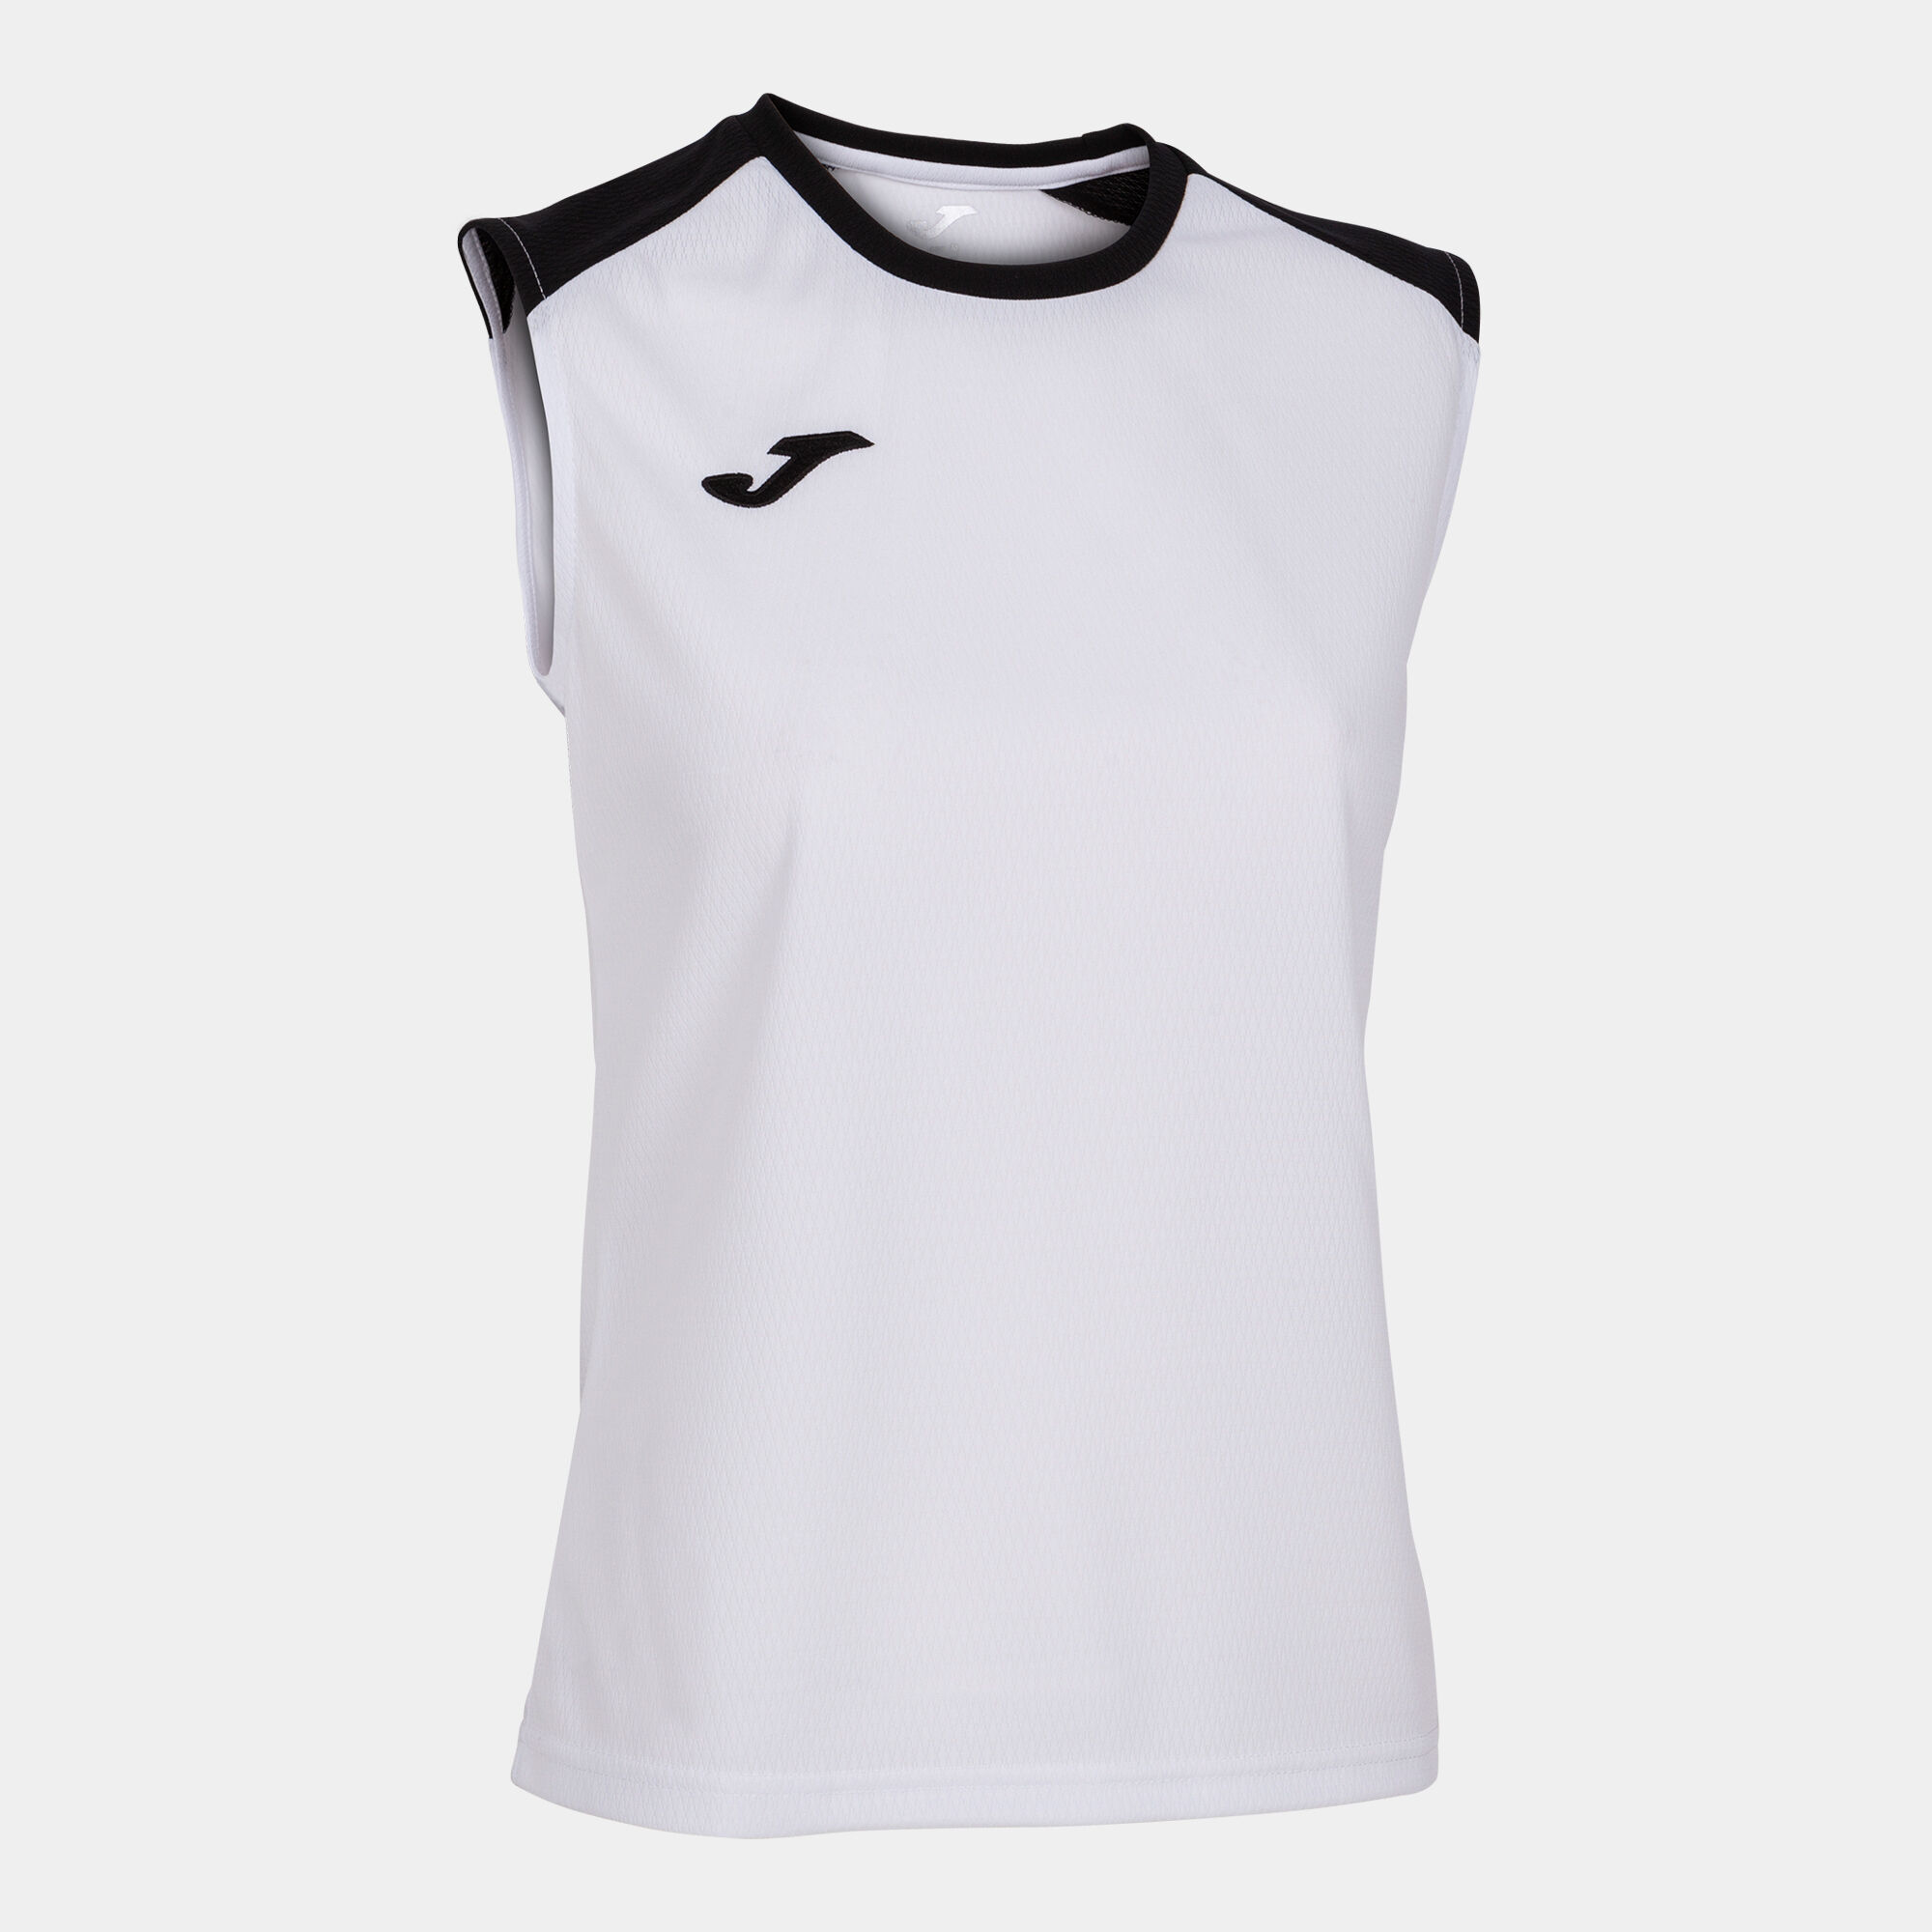 Camiseta tirantes mujer Eco Championship blanco negro